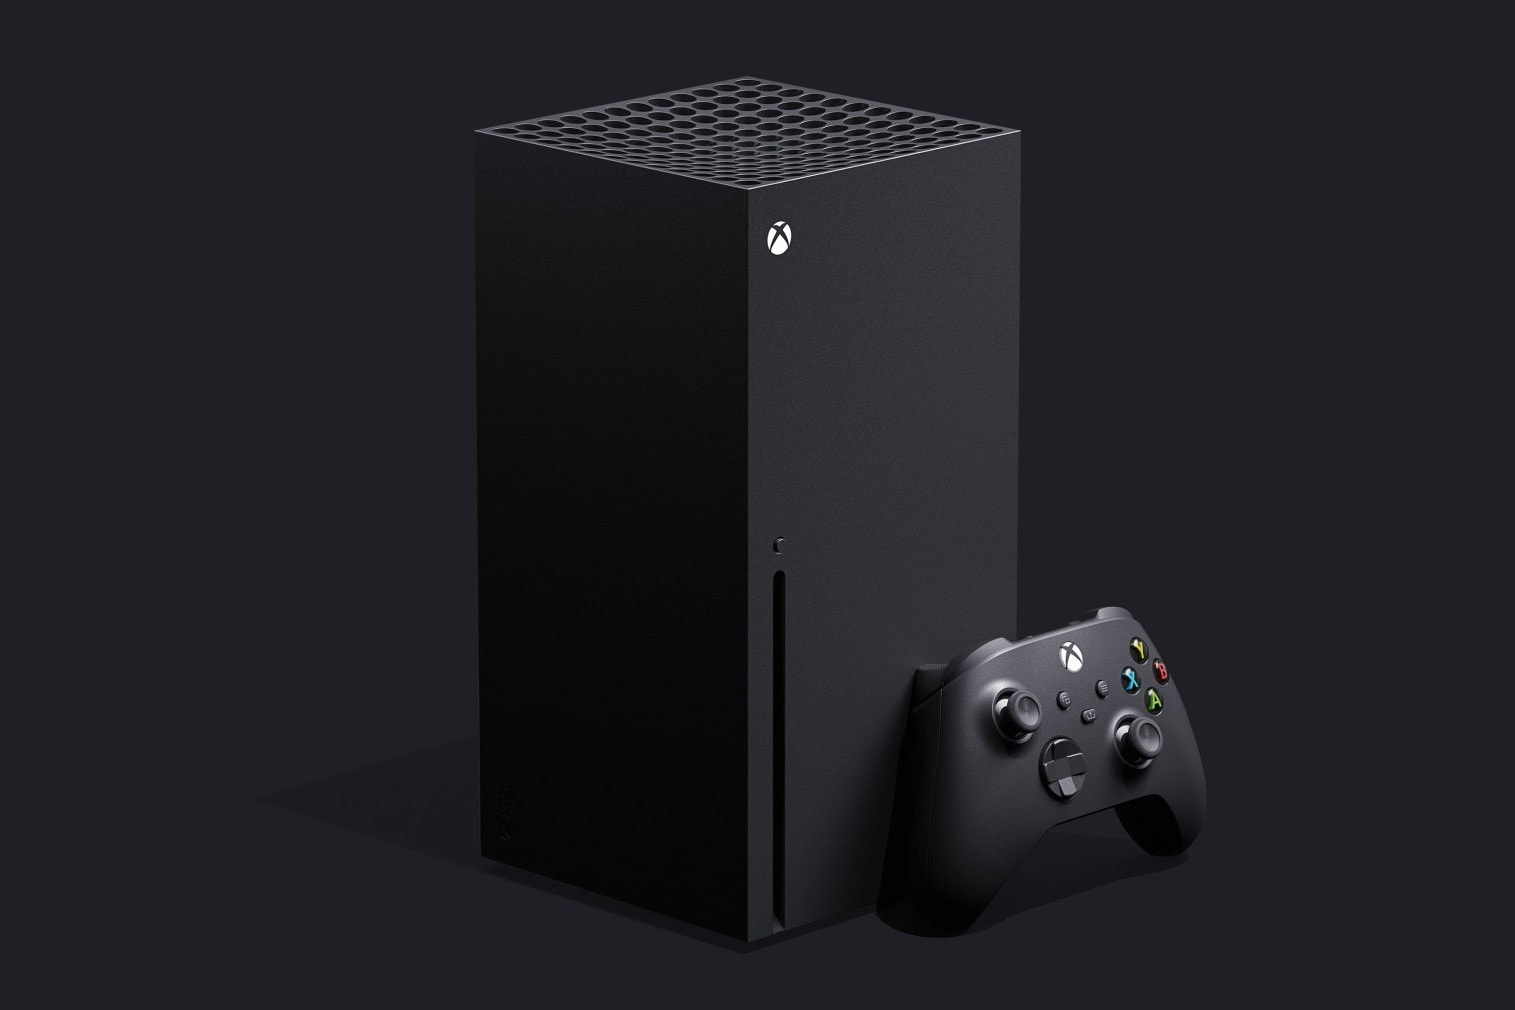 Microsoft Details Next-Gen Xbox: Series X Project Scarlett consoles xBox One 2020